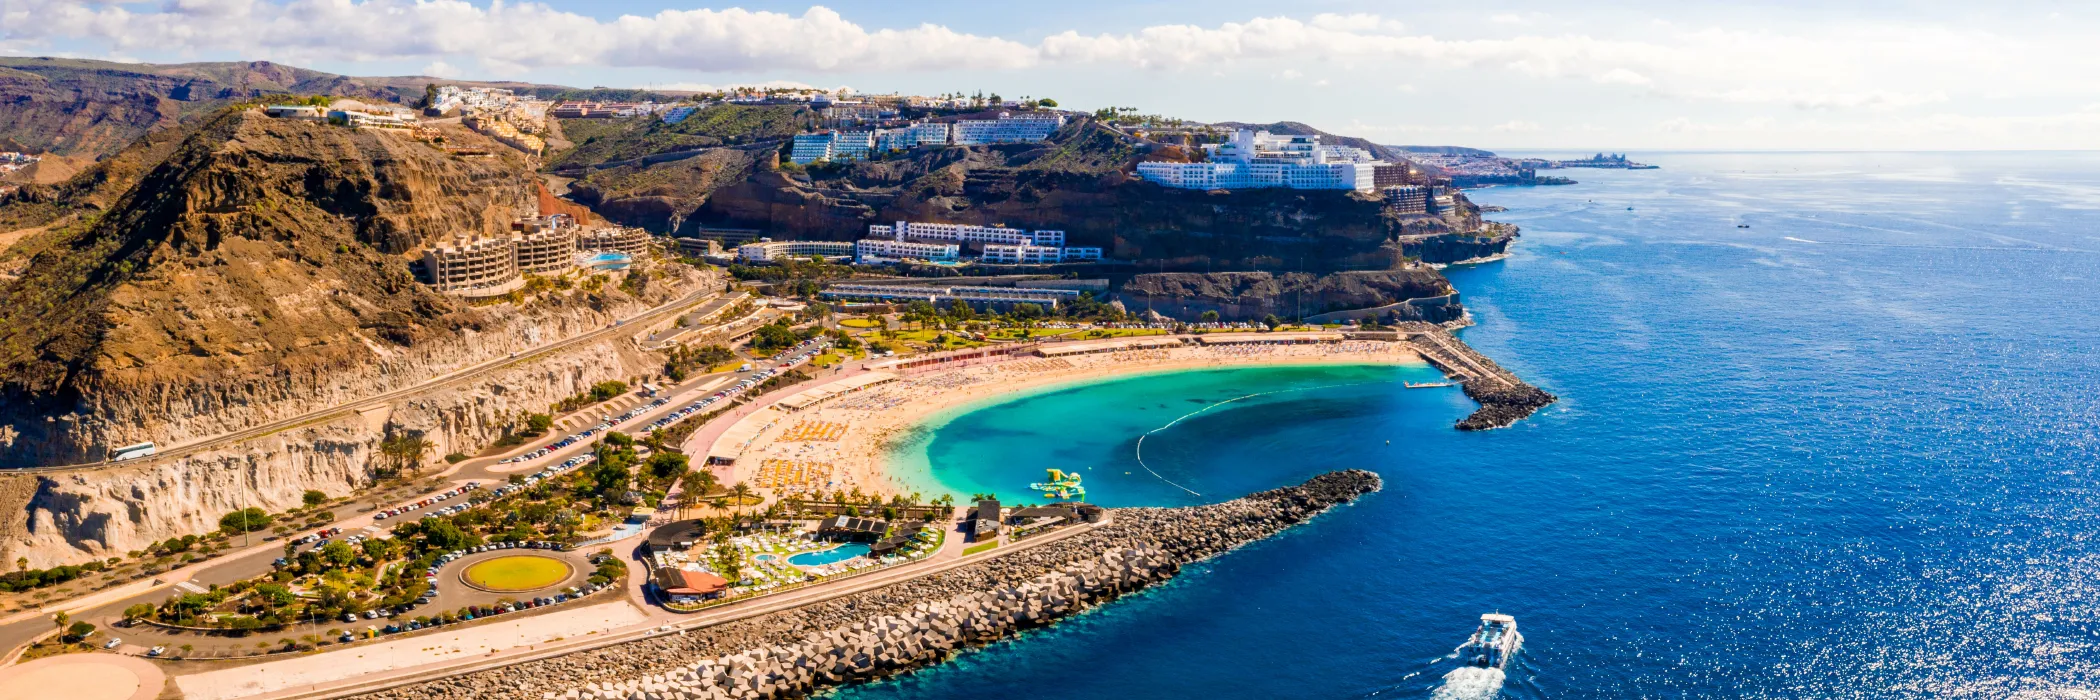 All Inclusive Gran Canaria Holidays - Amadores Beach